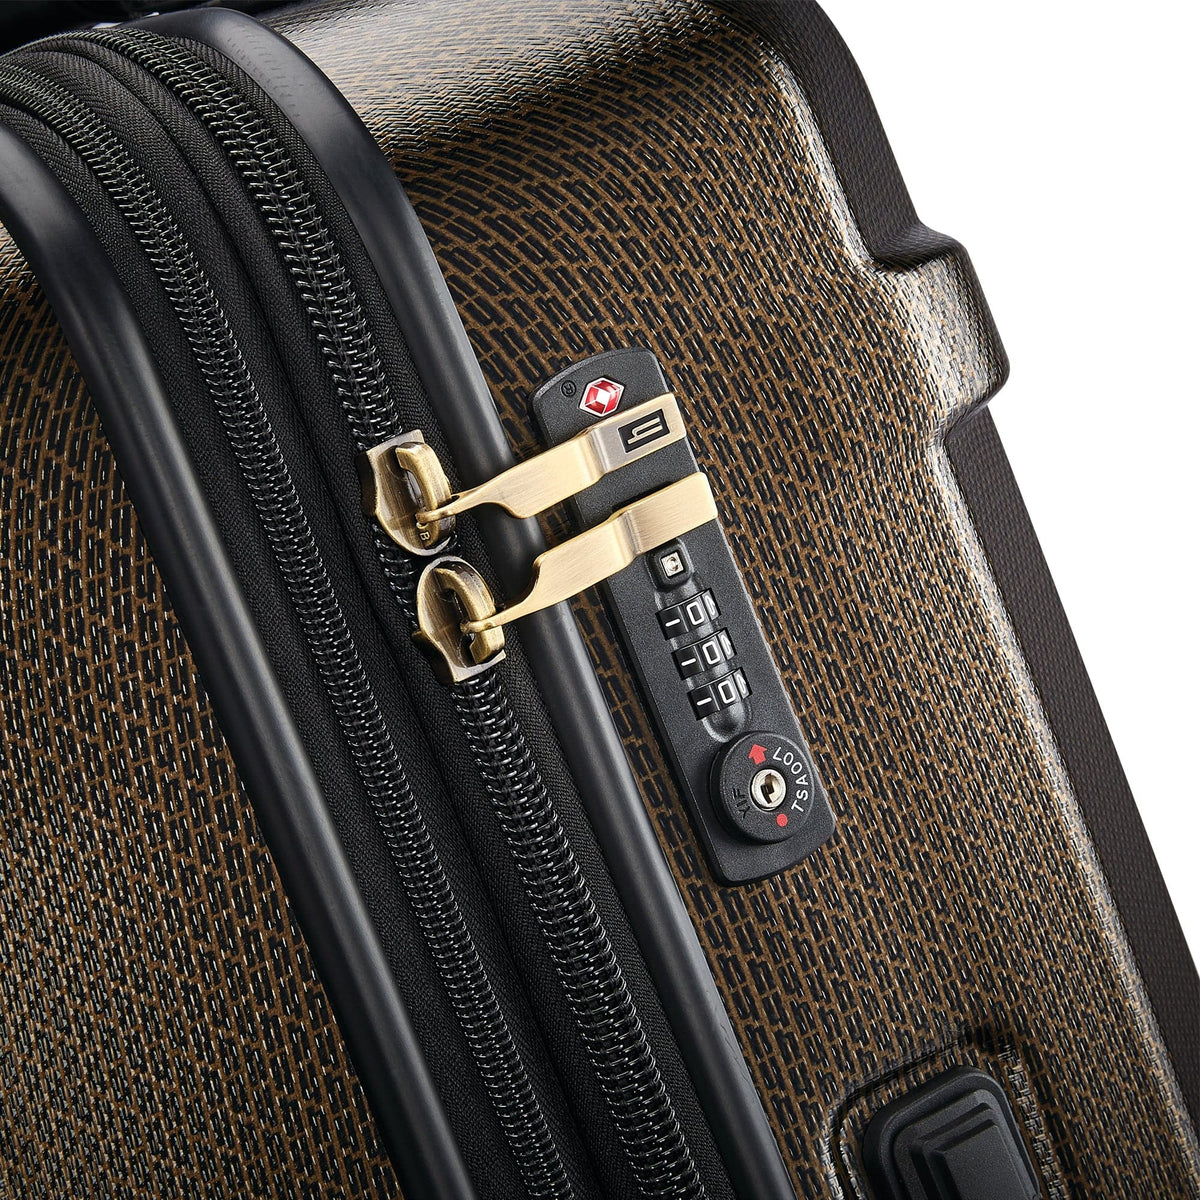 Hartmann Century Deluxe Hardside Medium Journey Expandable Spinner Luggage